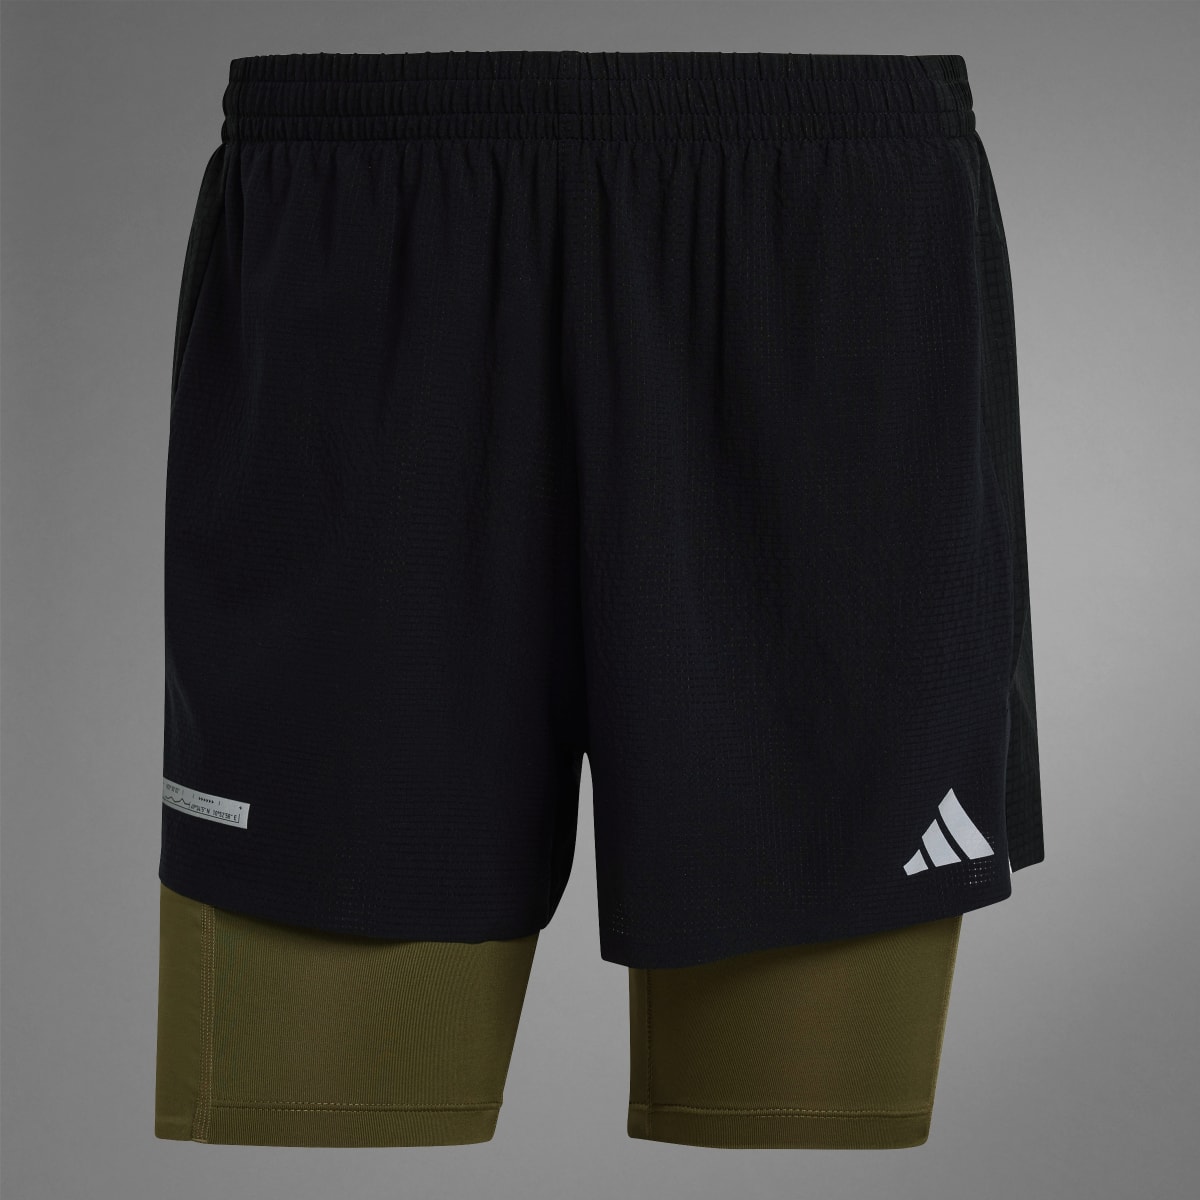 Adidas Shorts Ultimateadidas 2-en-1. 6